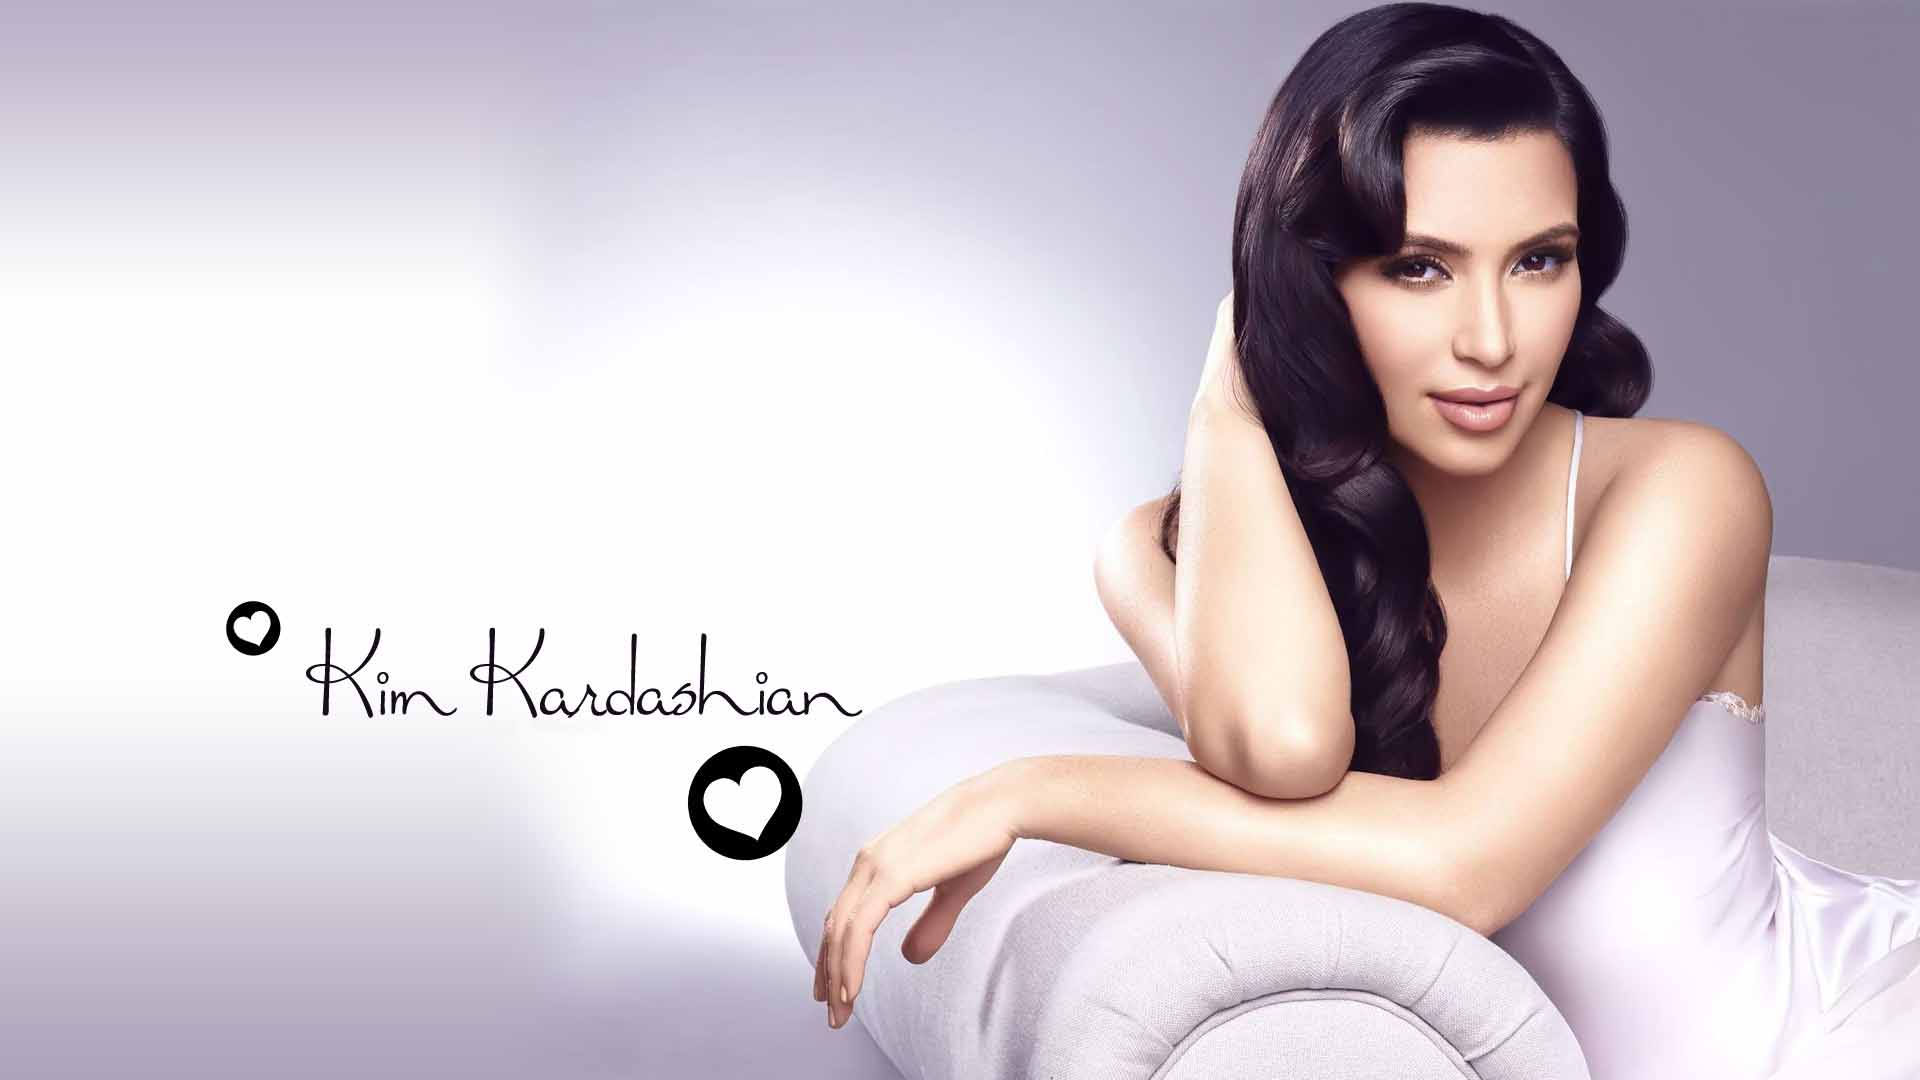 Kim Kardashian Background, High Definition, High Quality